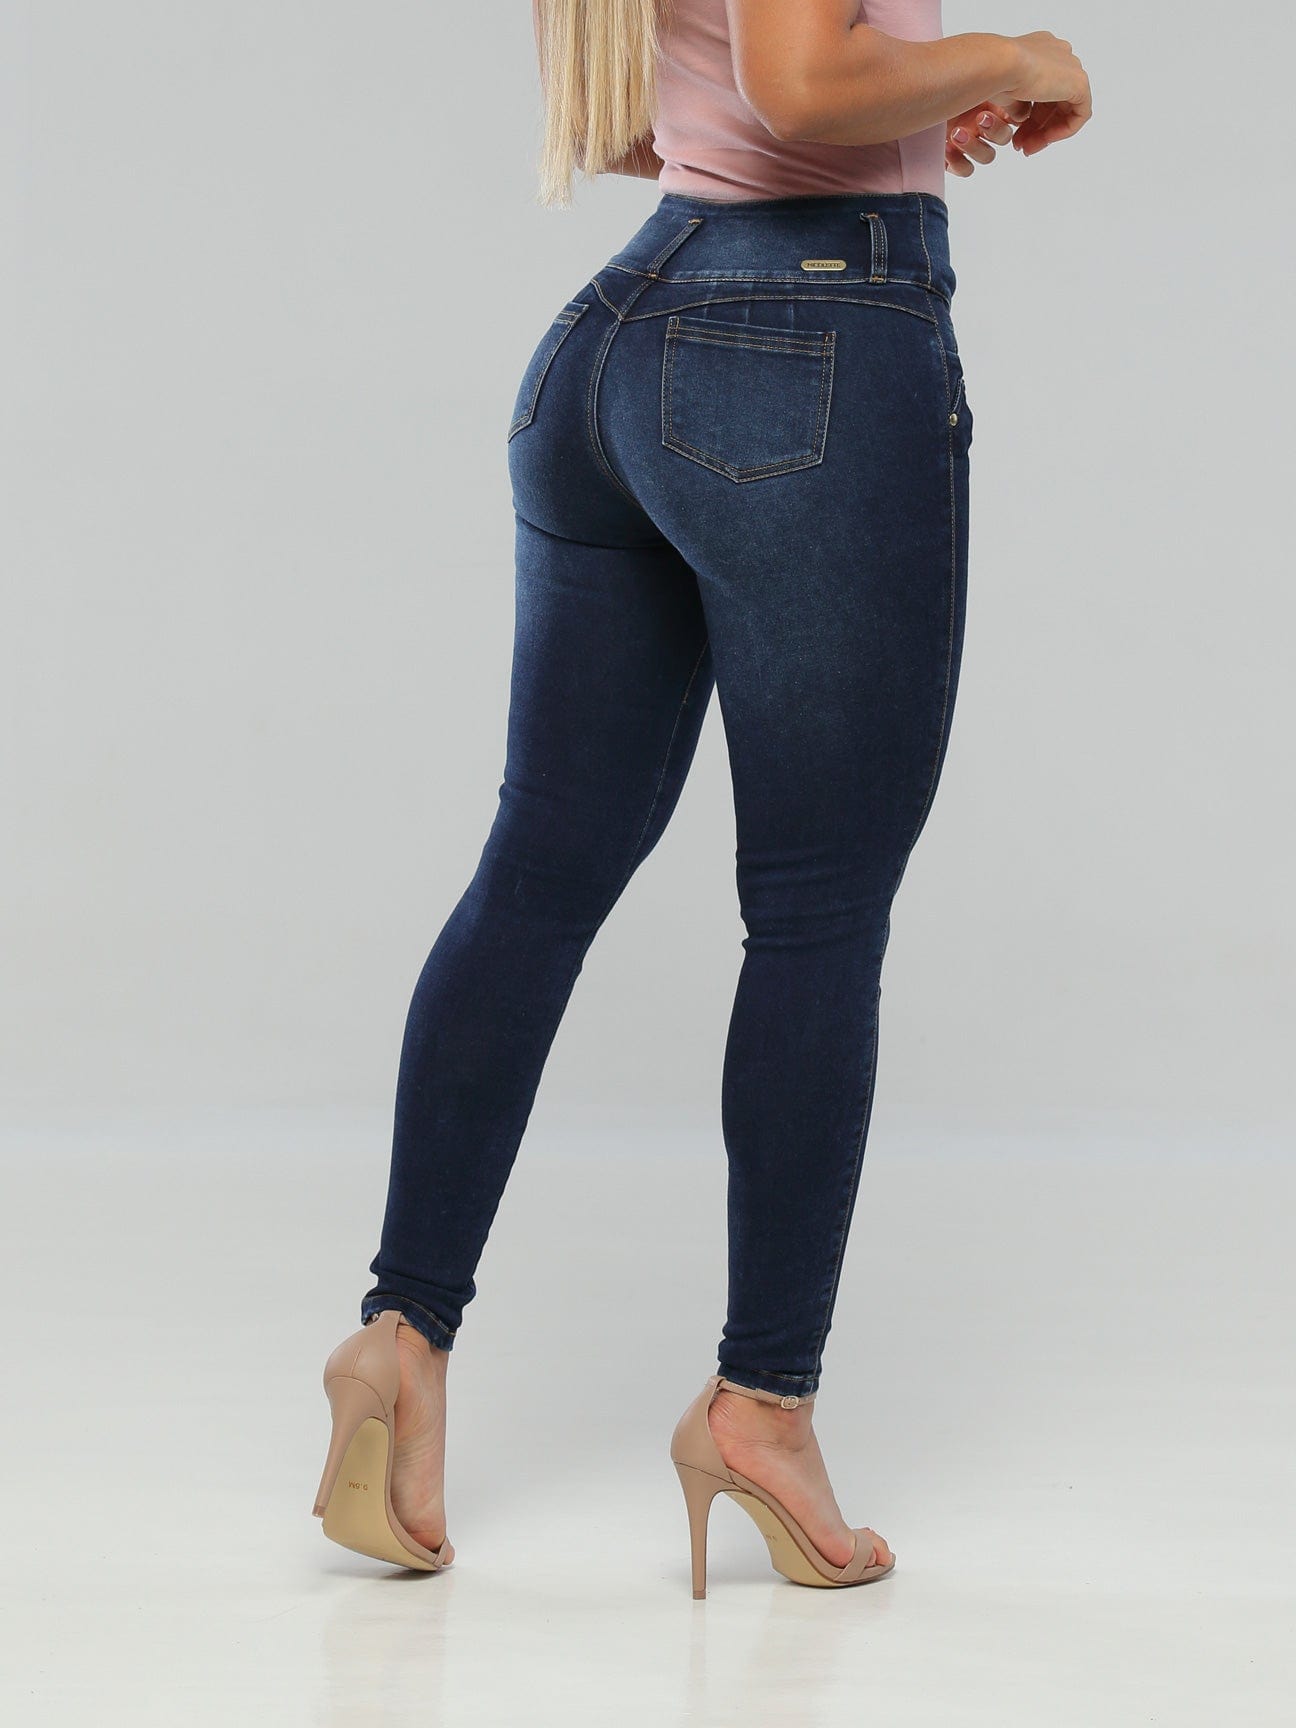 Colombian Butt Lifter Jeans Light Blue Lace 5955